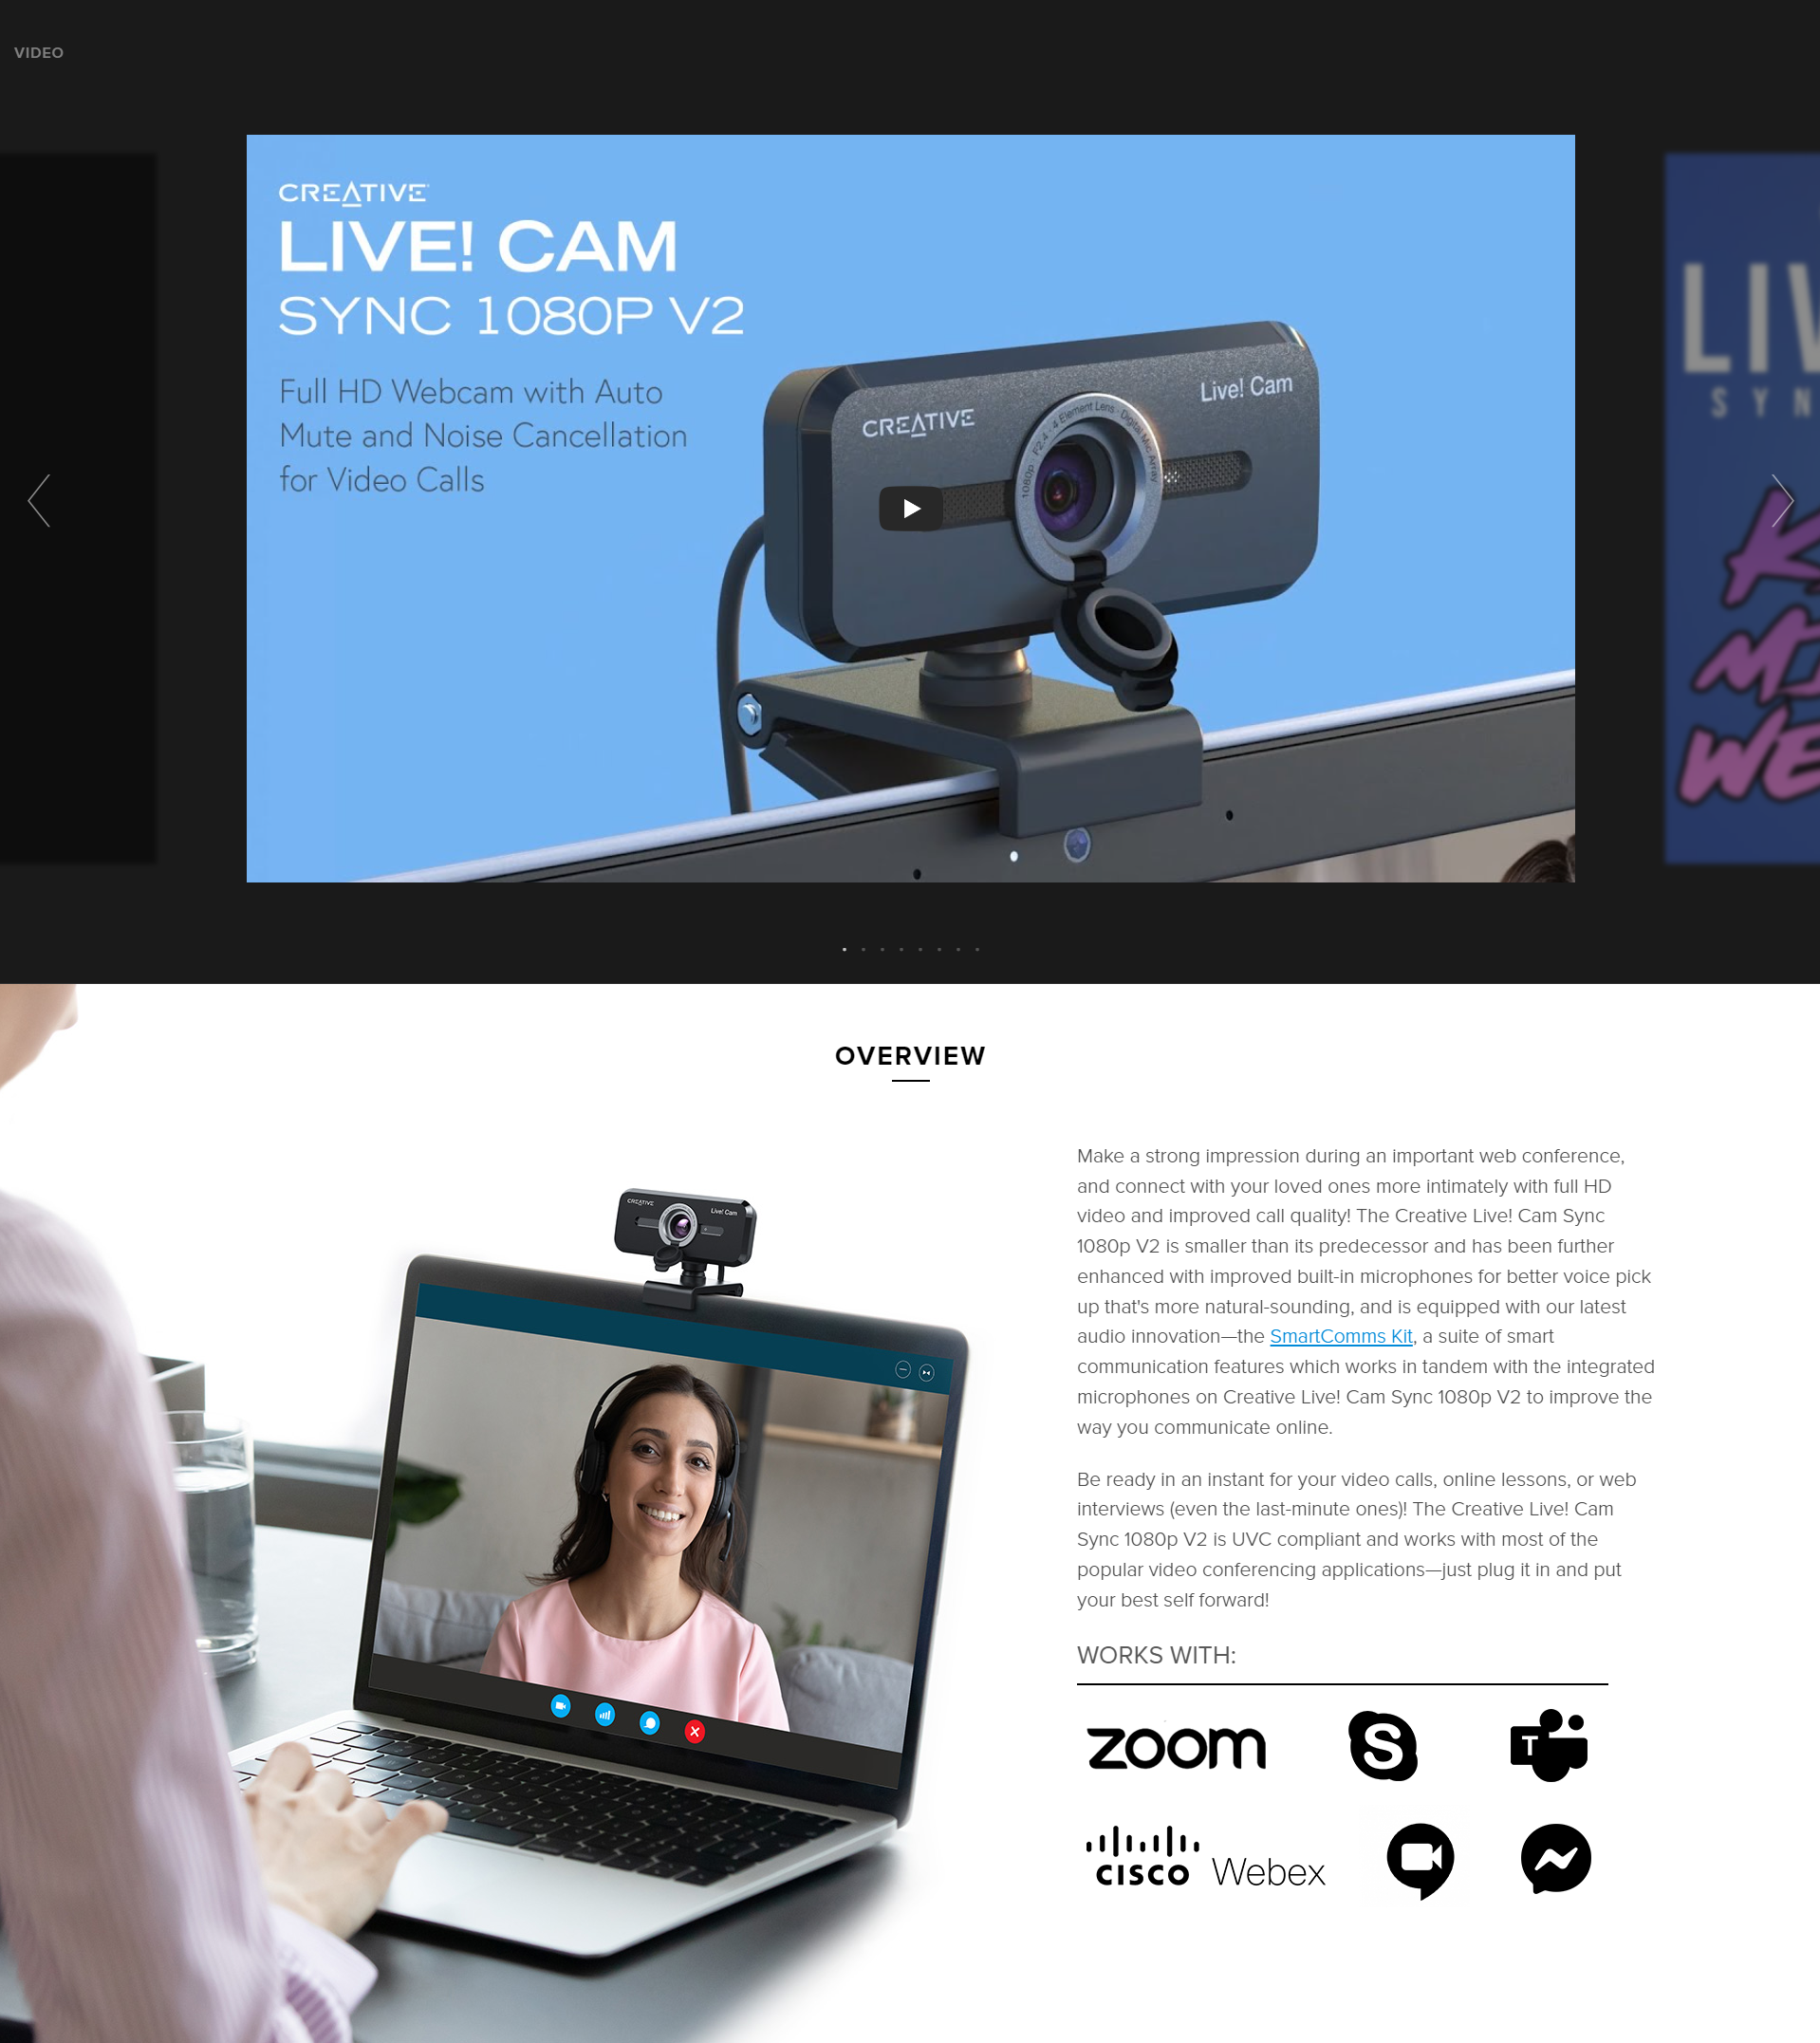 Auto With Canc Noise & Live 1080P Creative FHD Cam Mute V2 Webcam Sync